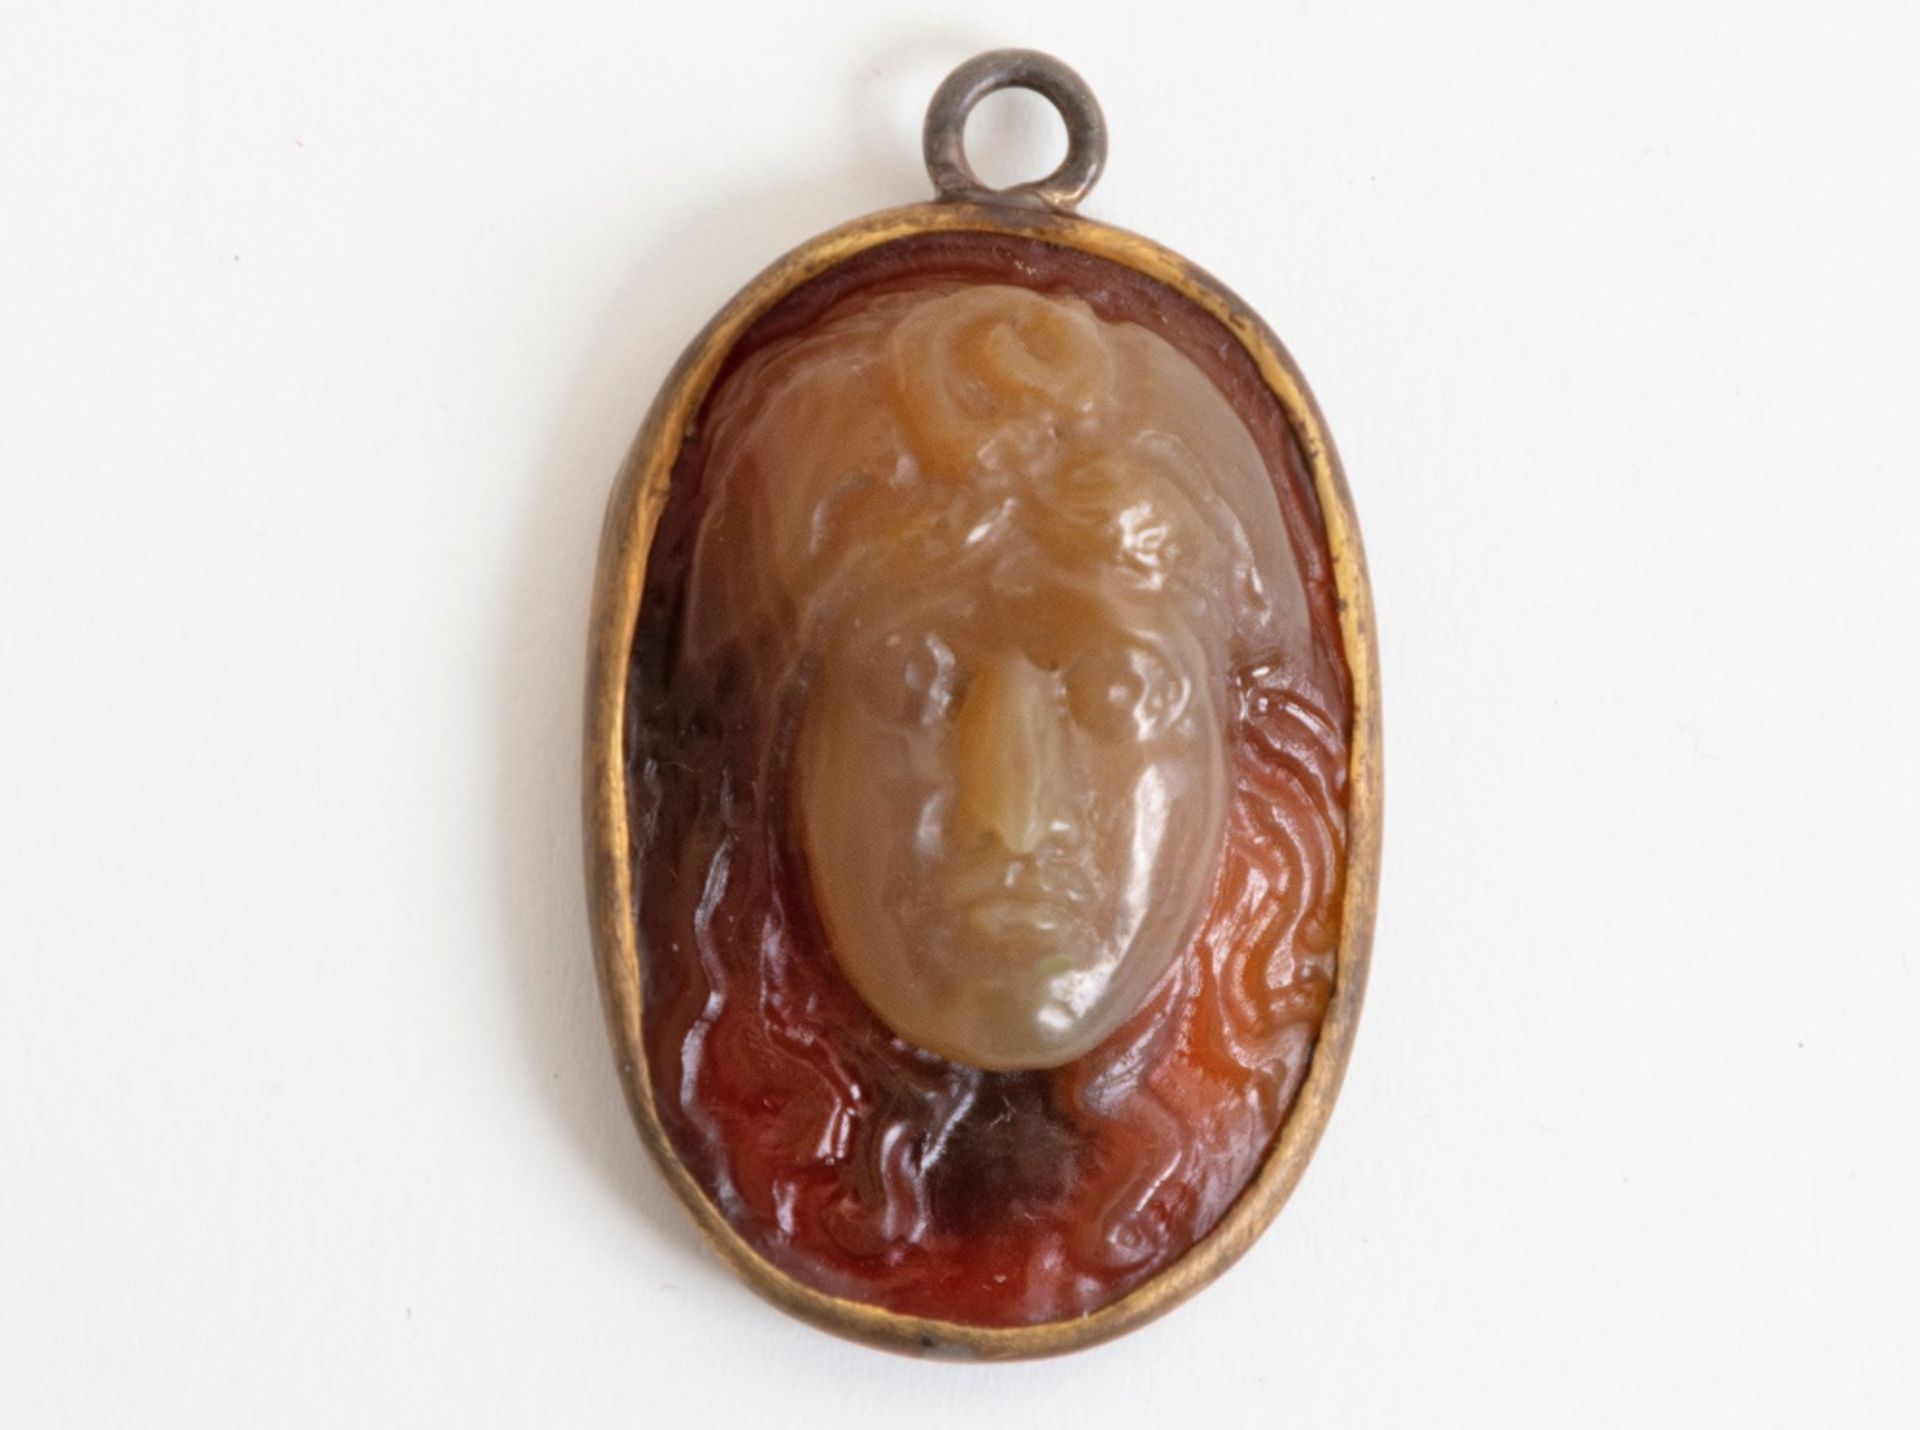 Sardius cameo pendant - Depicting Medusa's head. Metal frame. Cameo probably 17th century. Dim: 3.